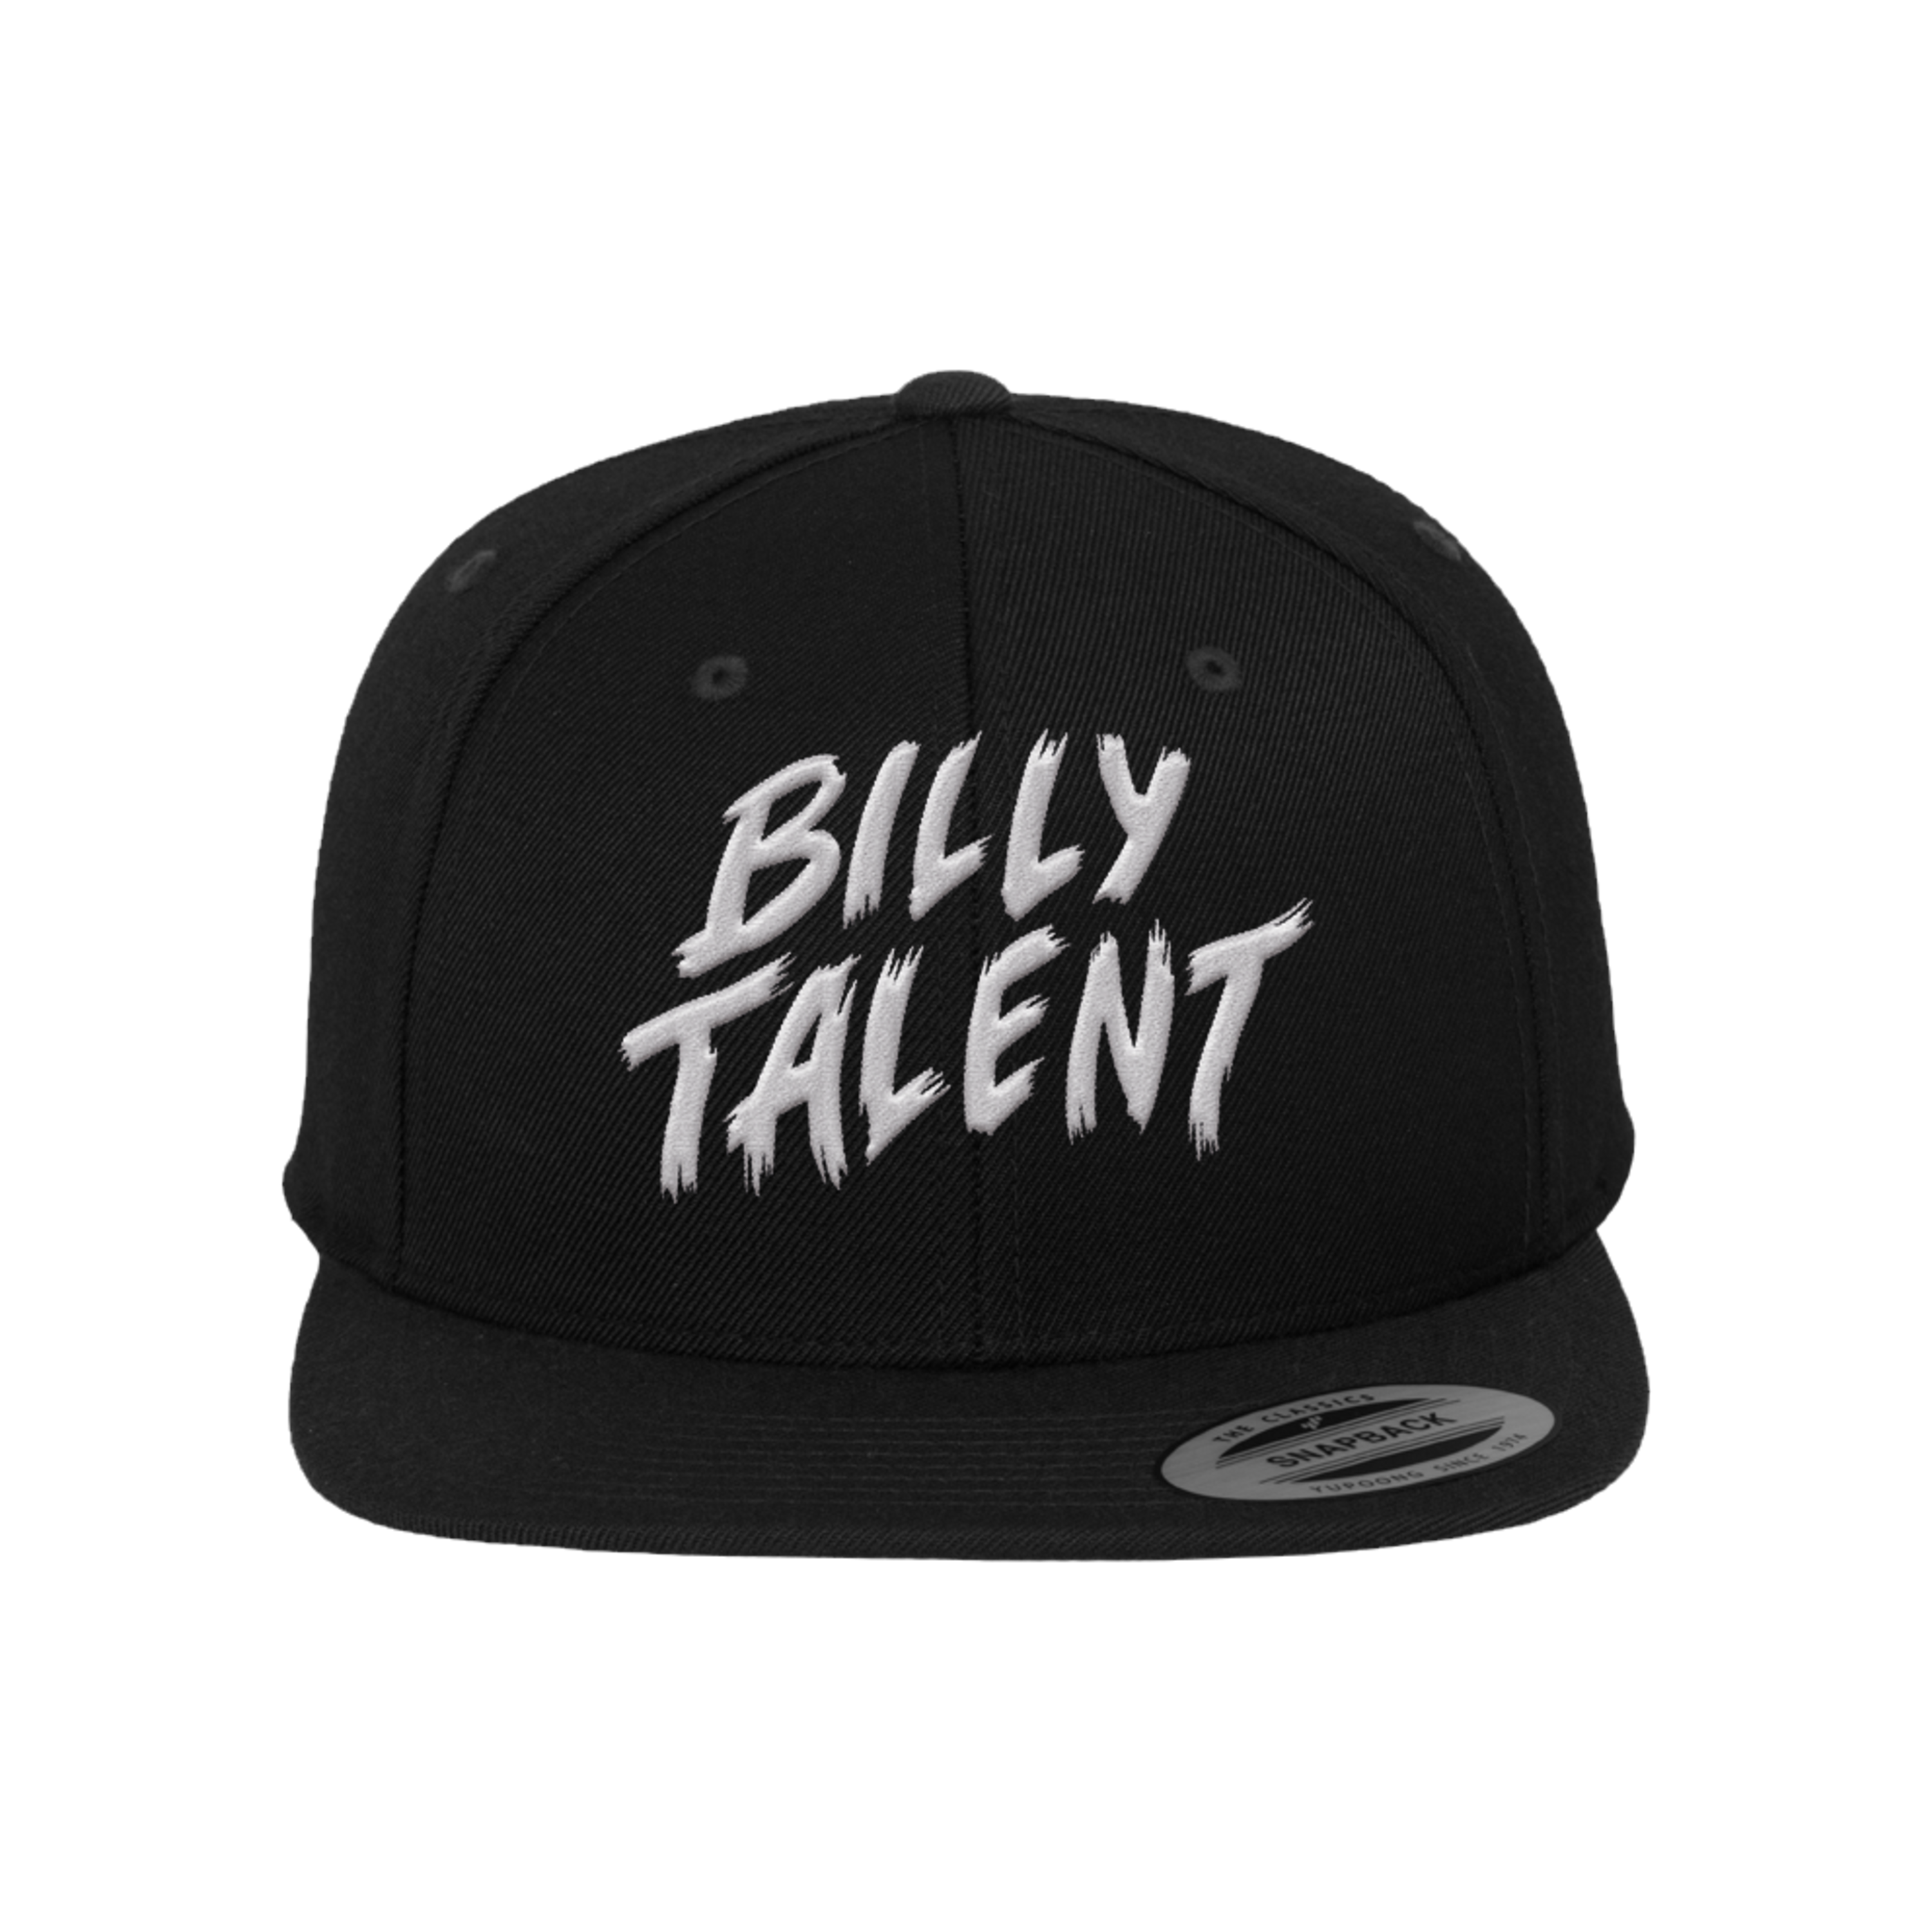 https://images.bravado.de/prod/product-assets/product-asset-data/billy-talent/billy-talent/products/141331/web/307447/image-thumb__307447__3000x3000_original/Billy-Talent-Logo-Snapbacks-schwarz-141331-307447.png